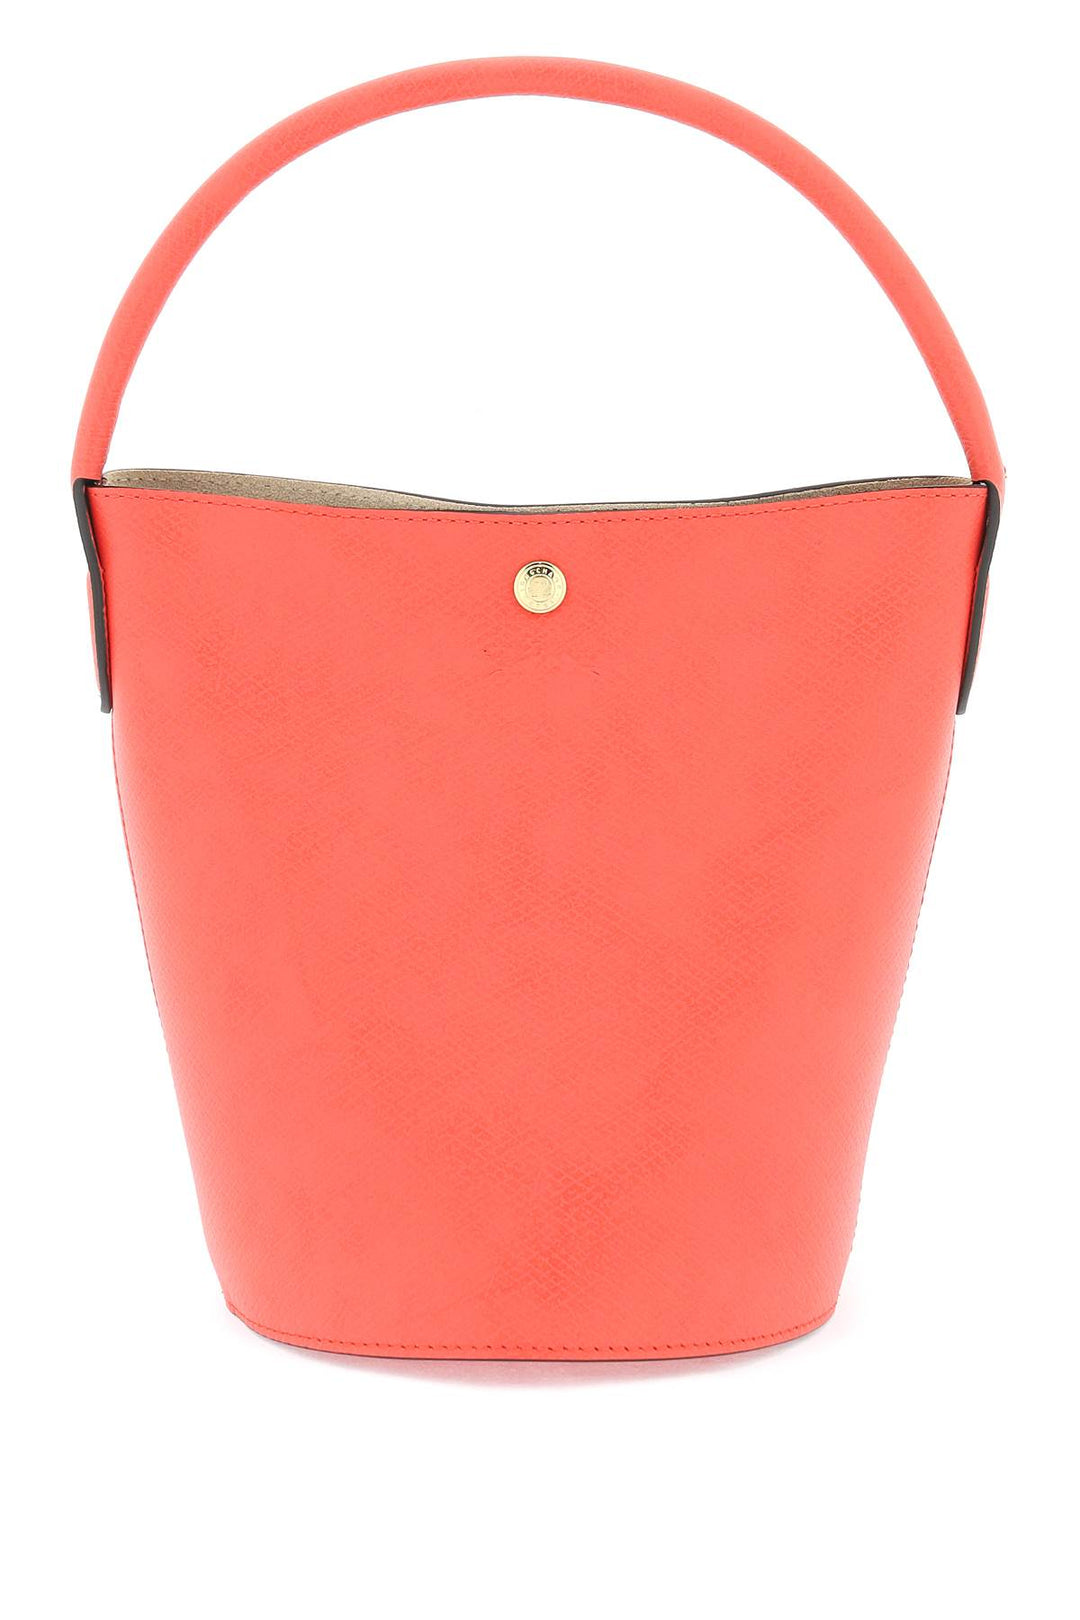 Longchamp épure S Bucket Bag   Rosso